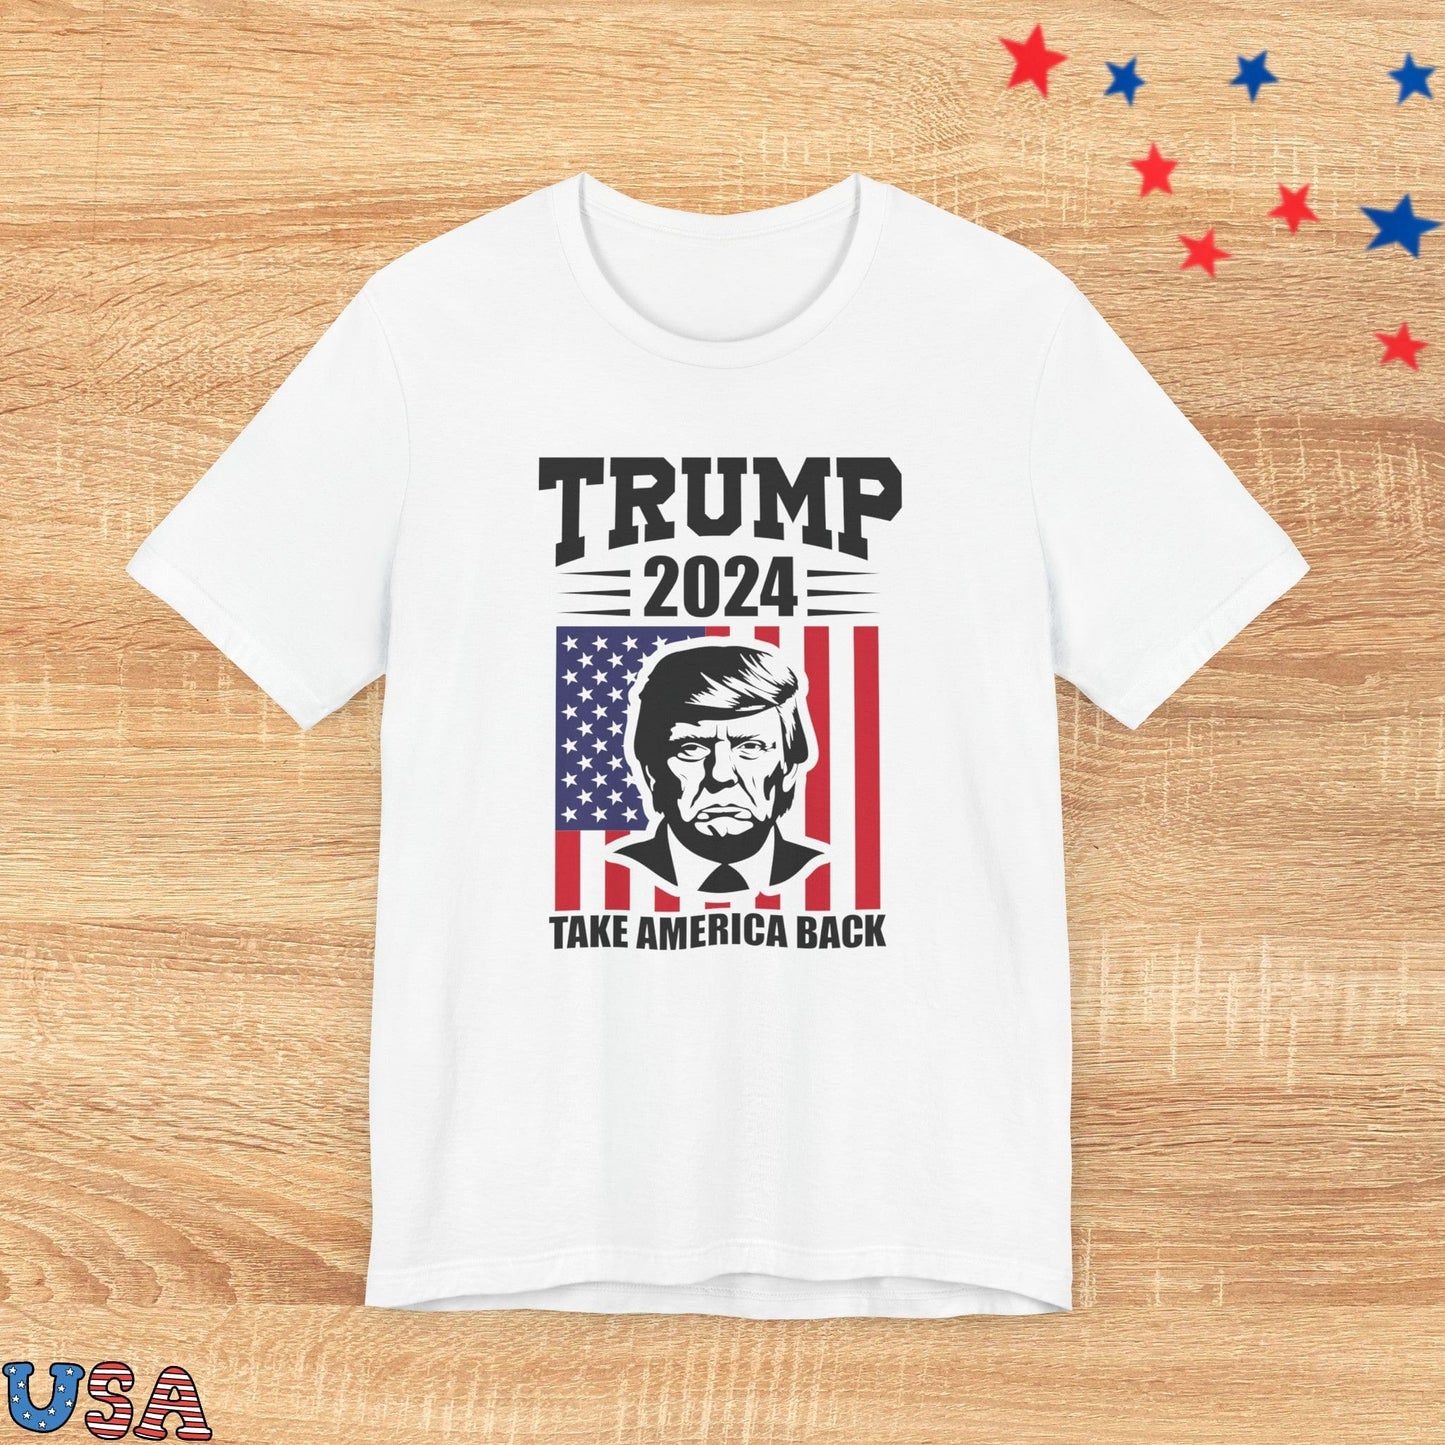 patriotic stars T-Shirt White / S Trump 2024 Flag - Take America Back